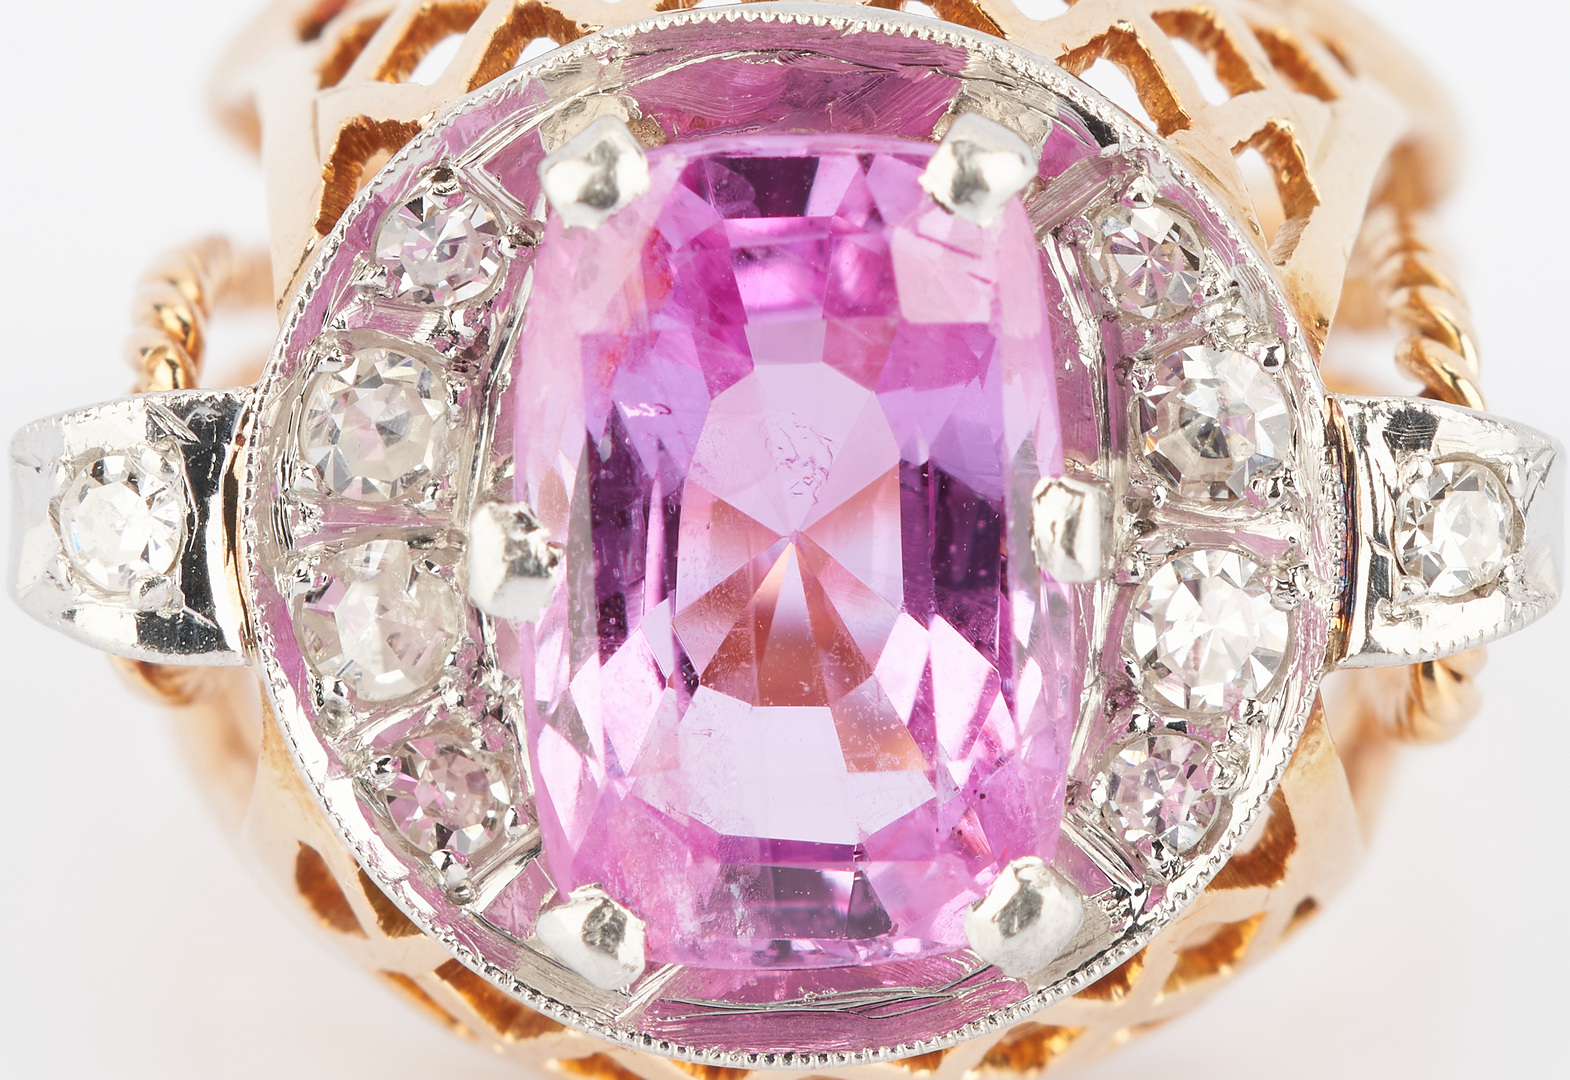 Lot 268: Ladies 14K Pink Sapphire Ring